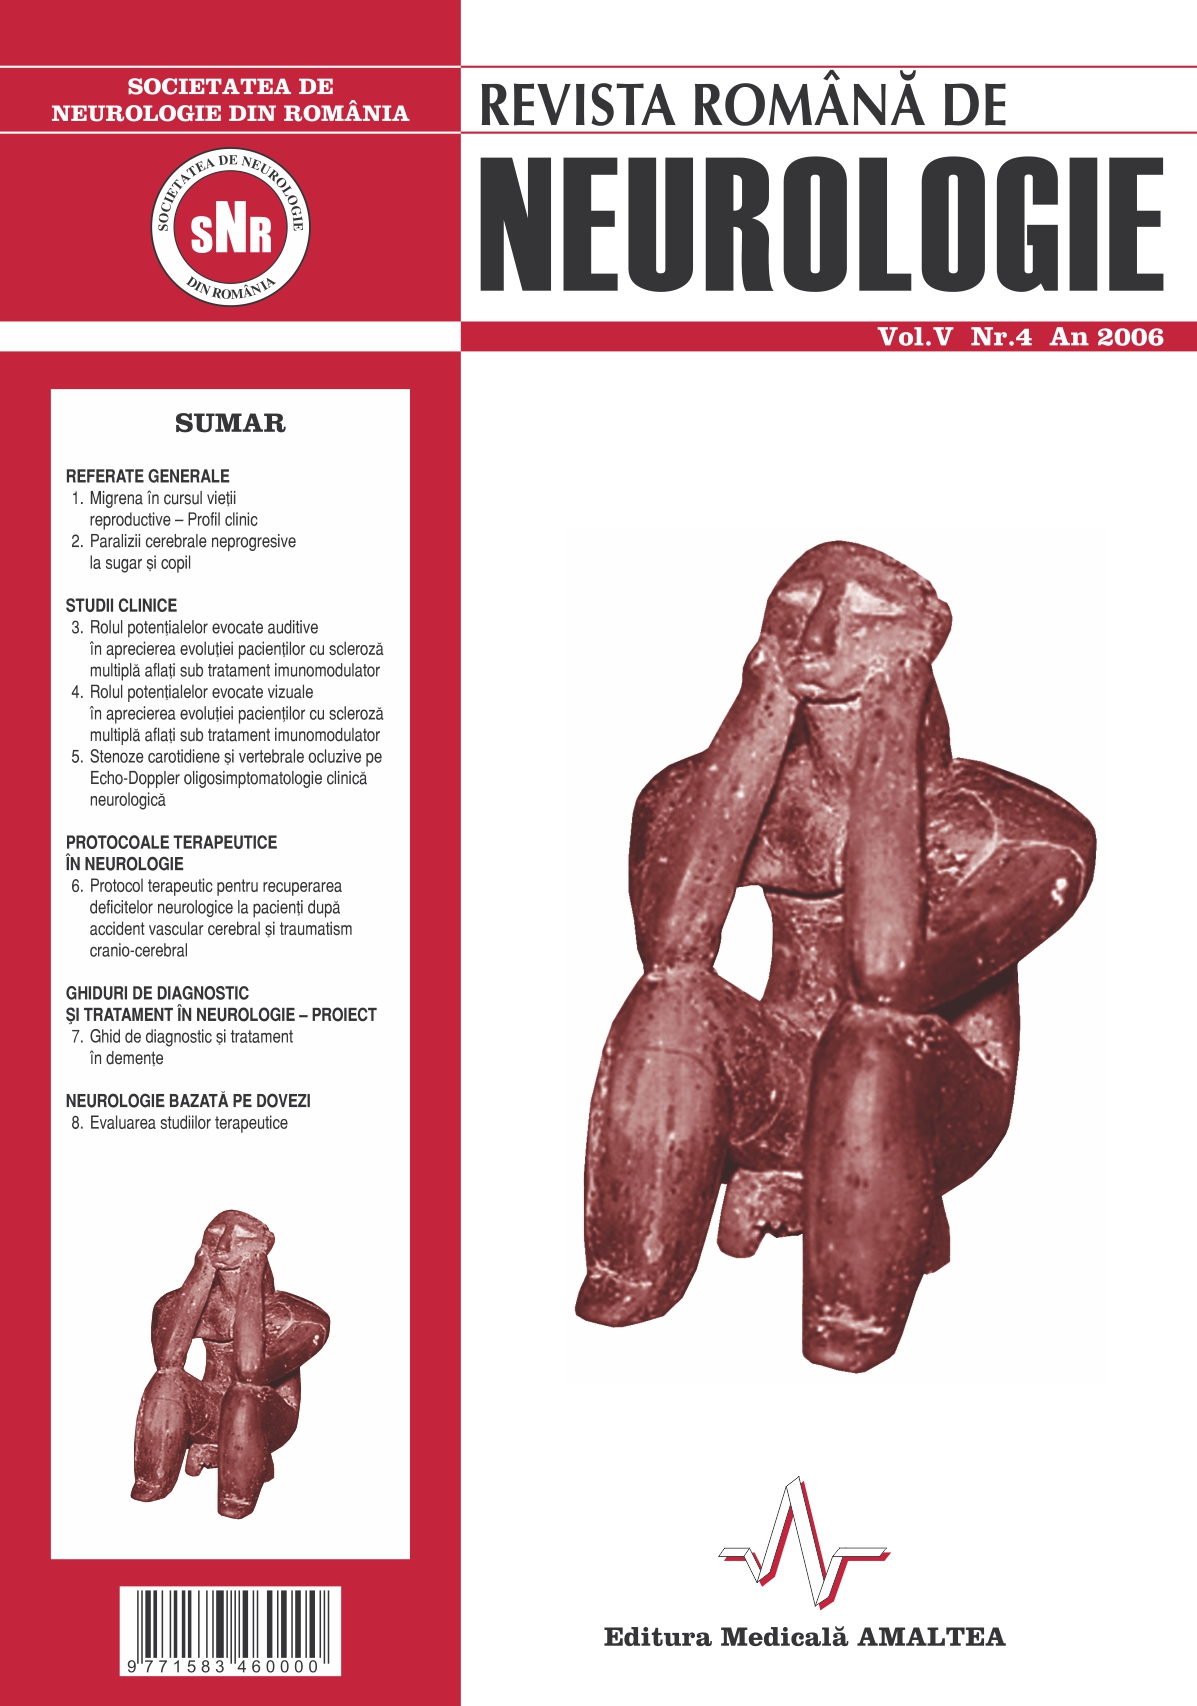 Romanian Journal of Neurology, Volume V, No. 4, 2006